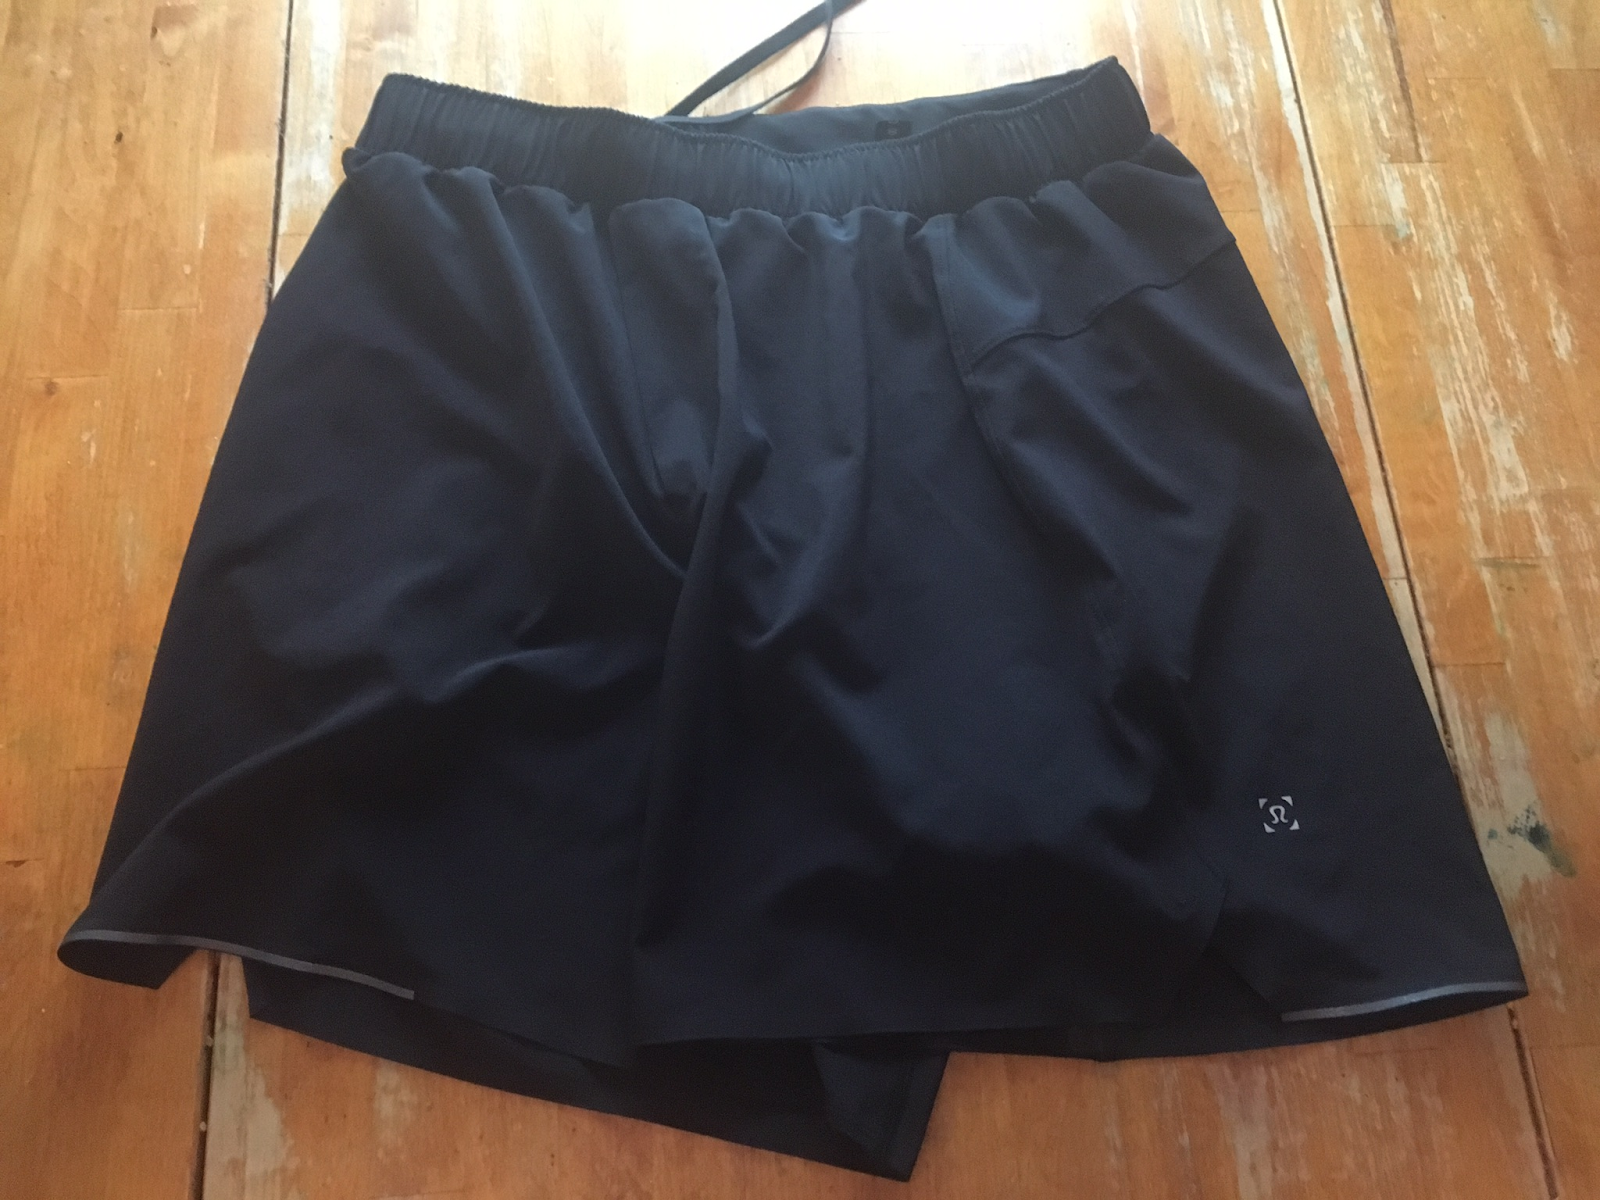 Surge Lined Short 6, Men's Shorts, lululemon